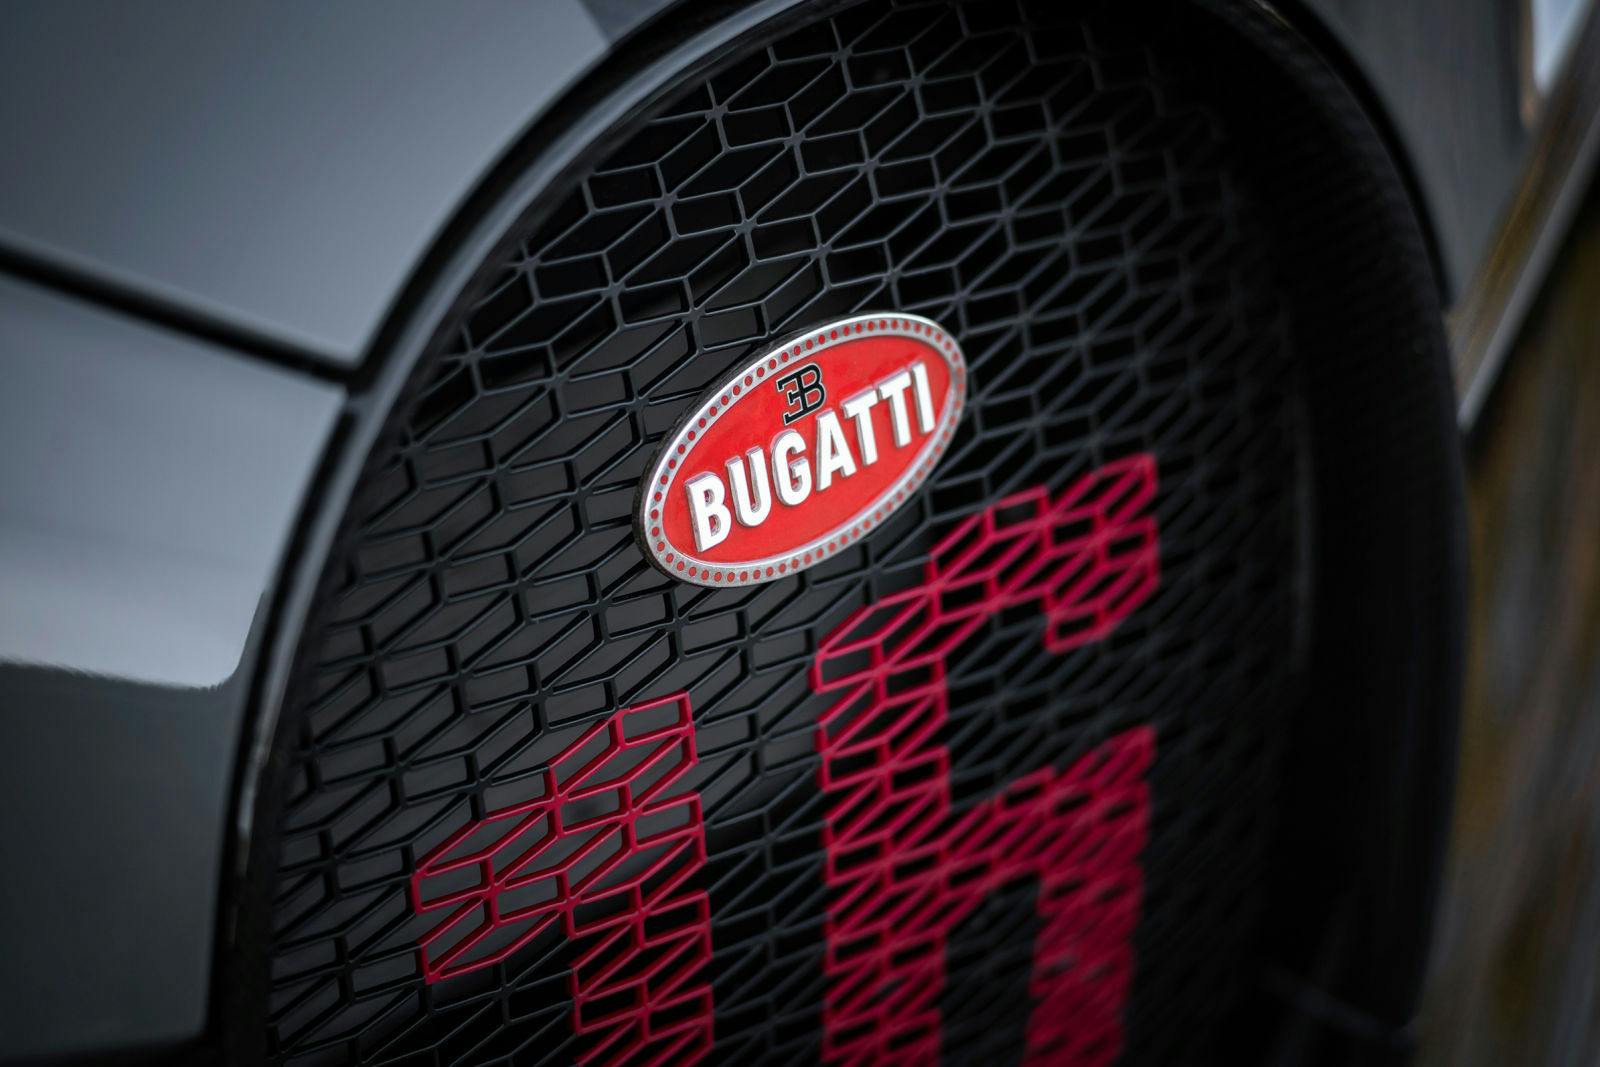 The Bugatti Chiron Pur Sport in detail.